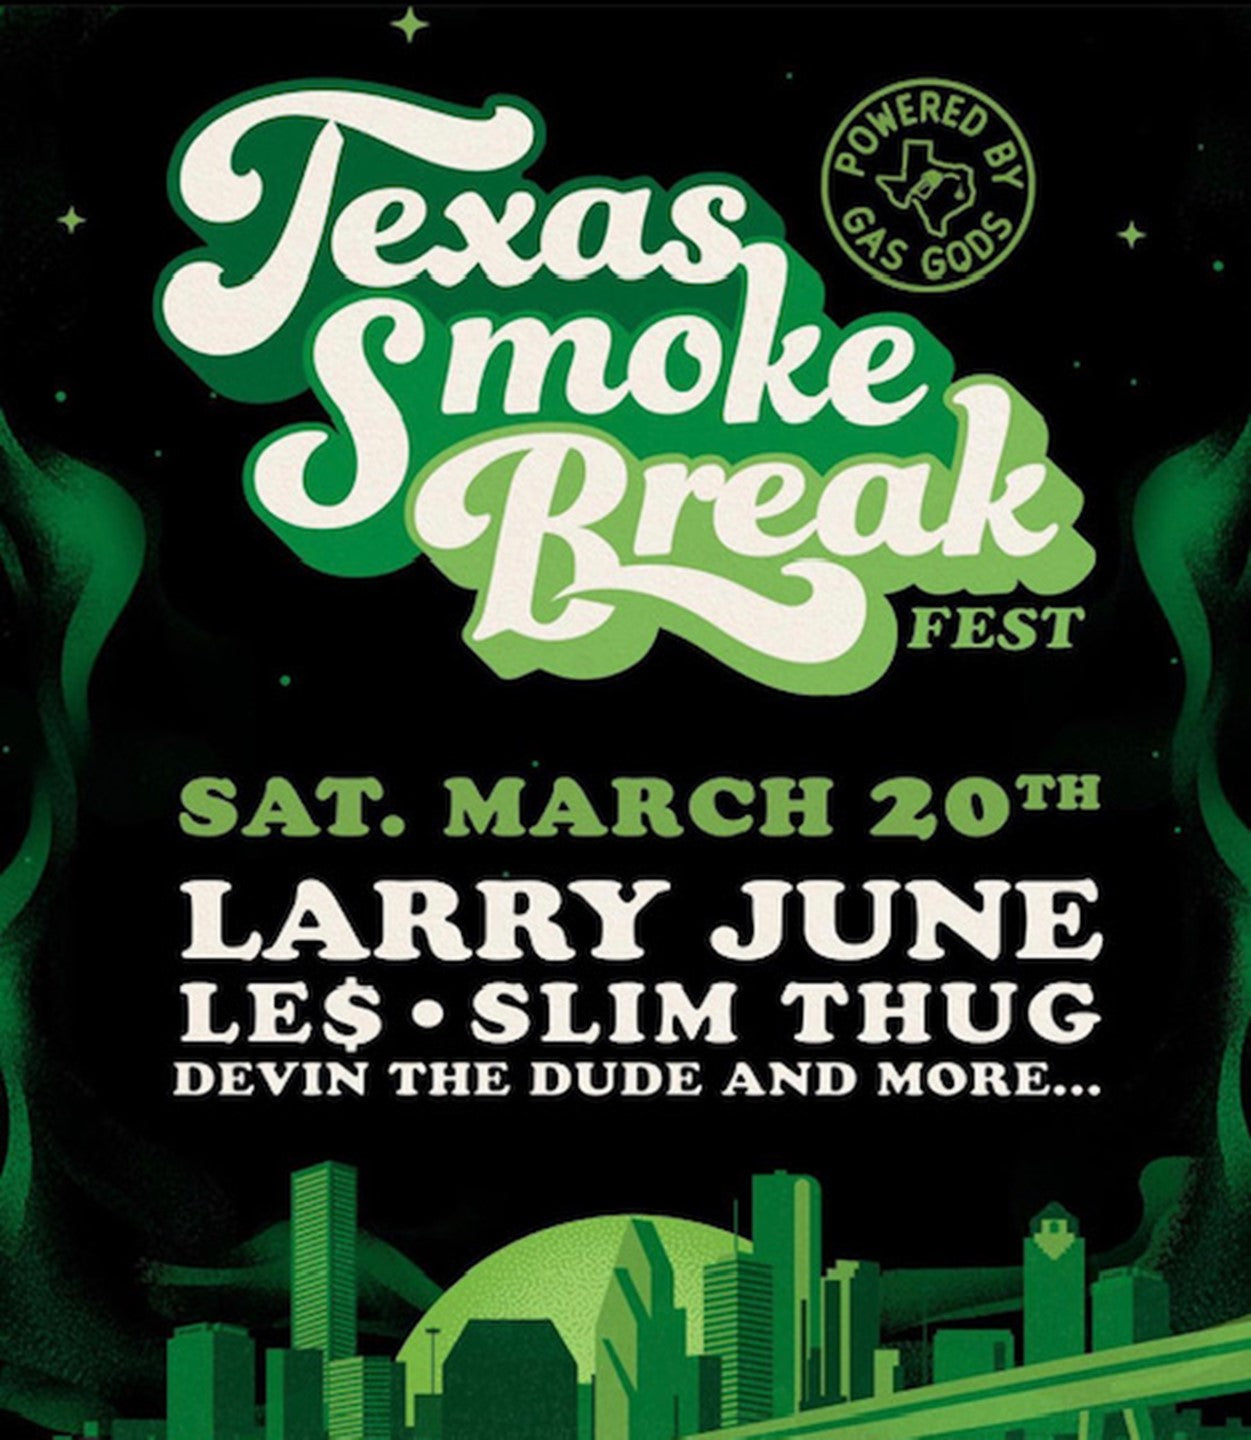 Texas Smoke Break